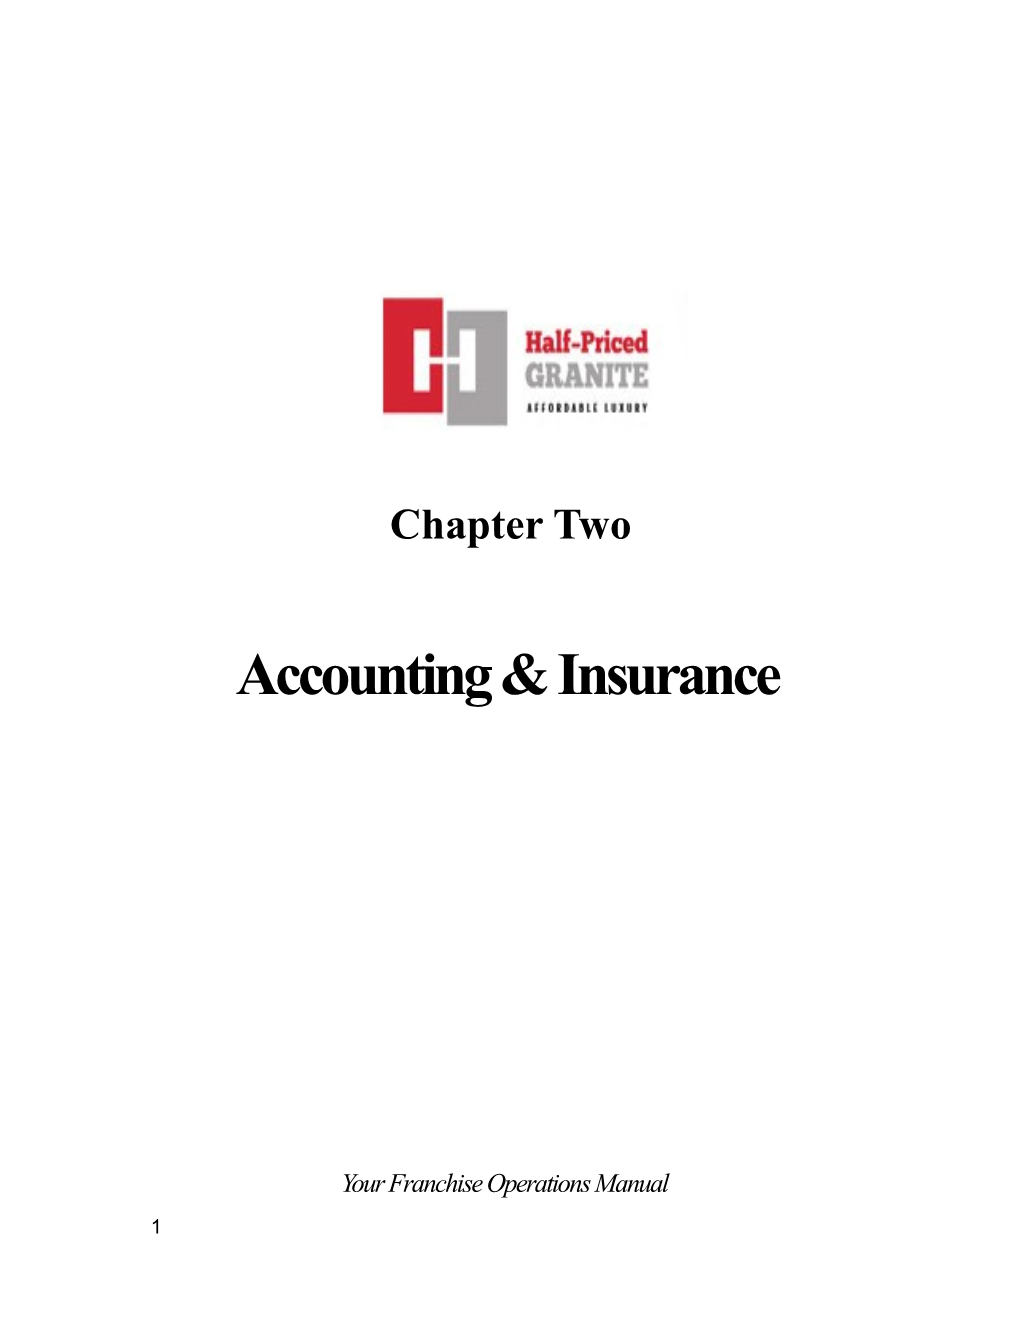 Accounting & Insurance